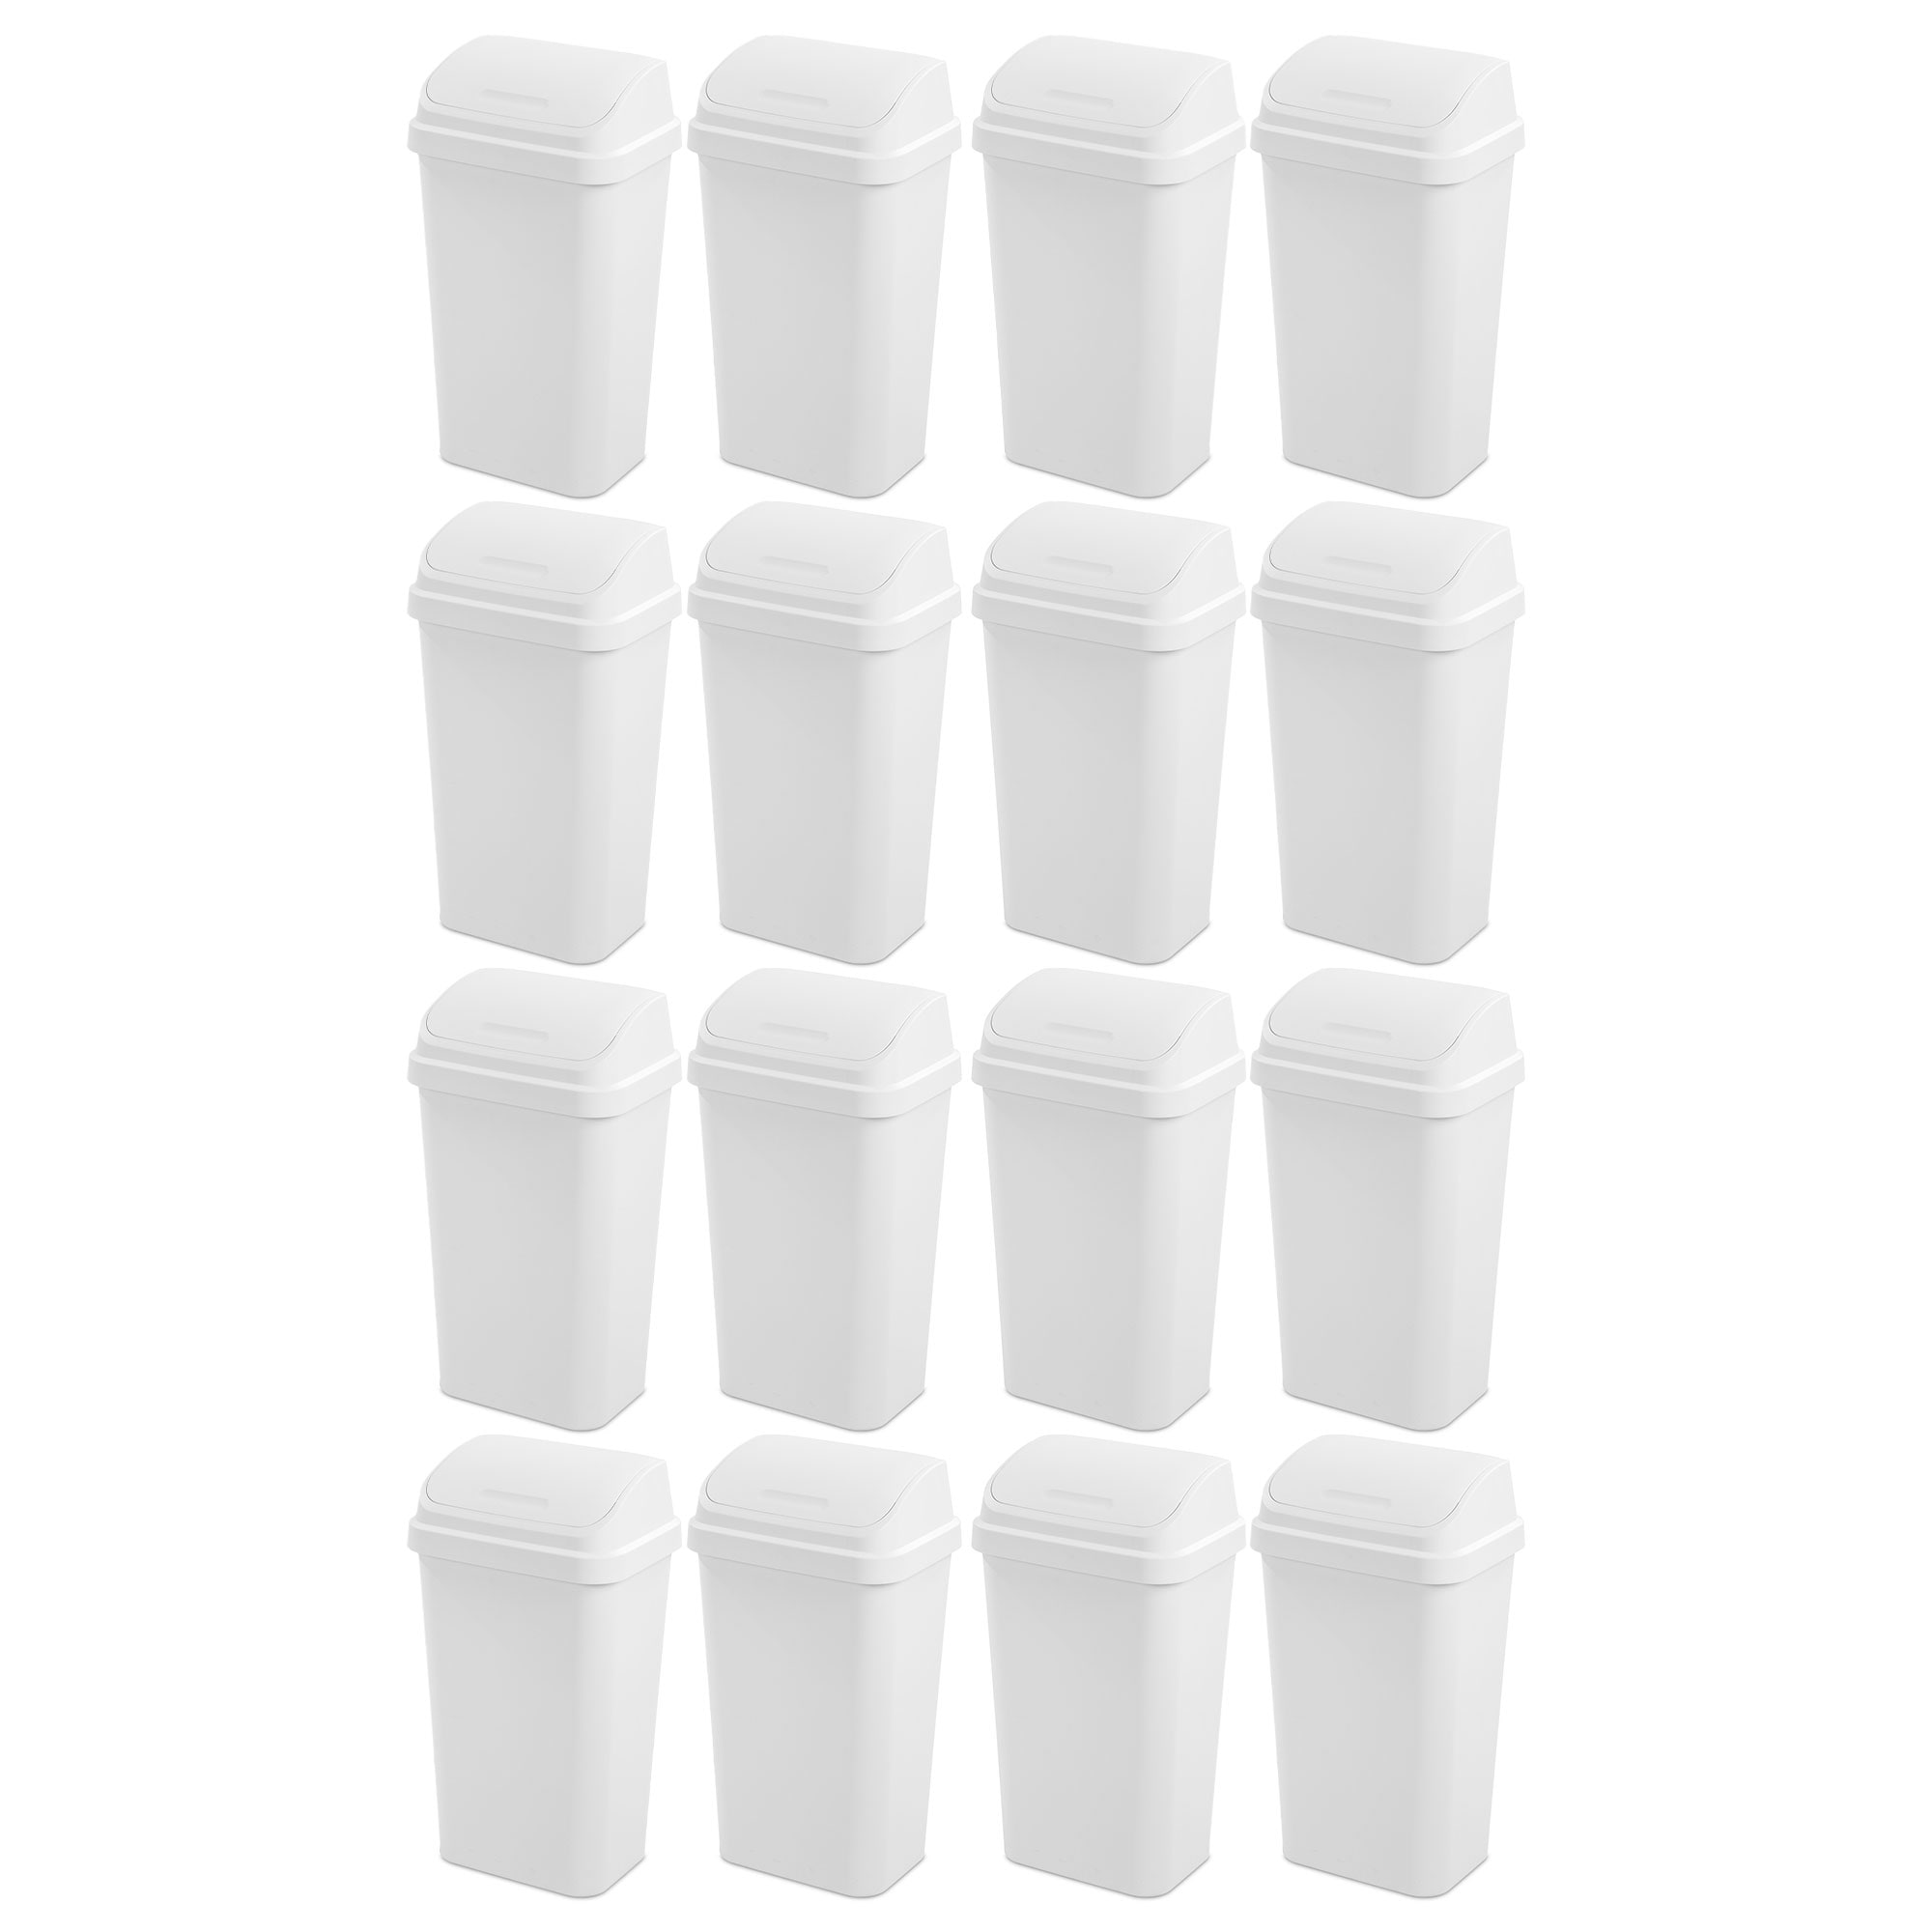 Sterilite 13 Gal Swing Top Lidded Wastebasket Kitchen Trash Can, White (4 Pack)